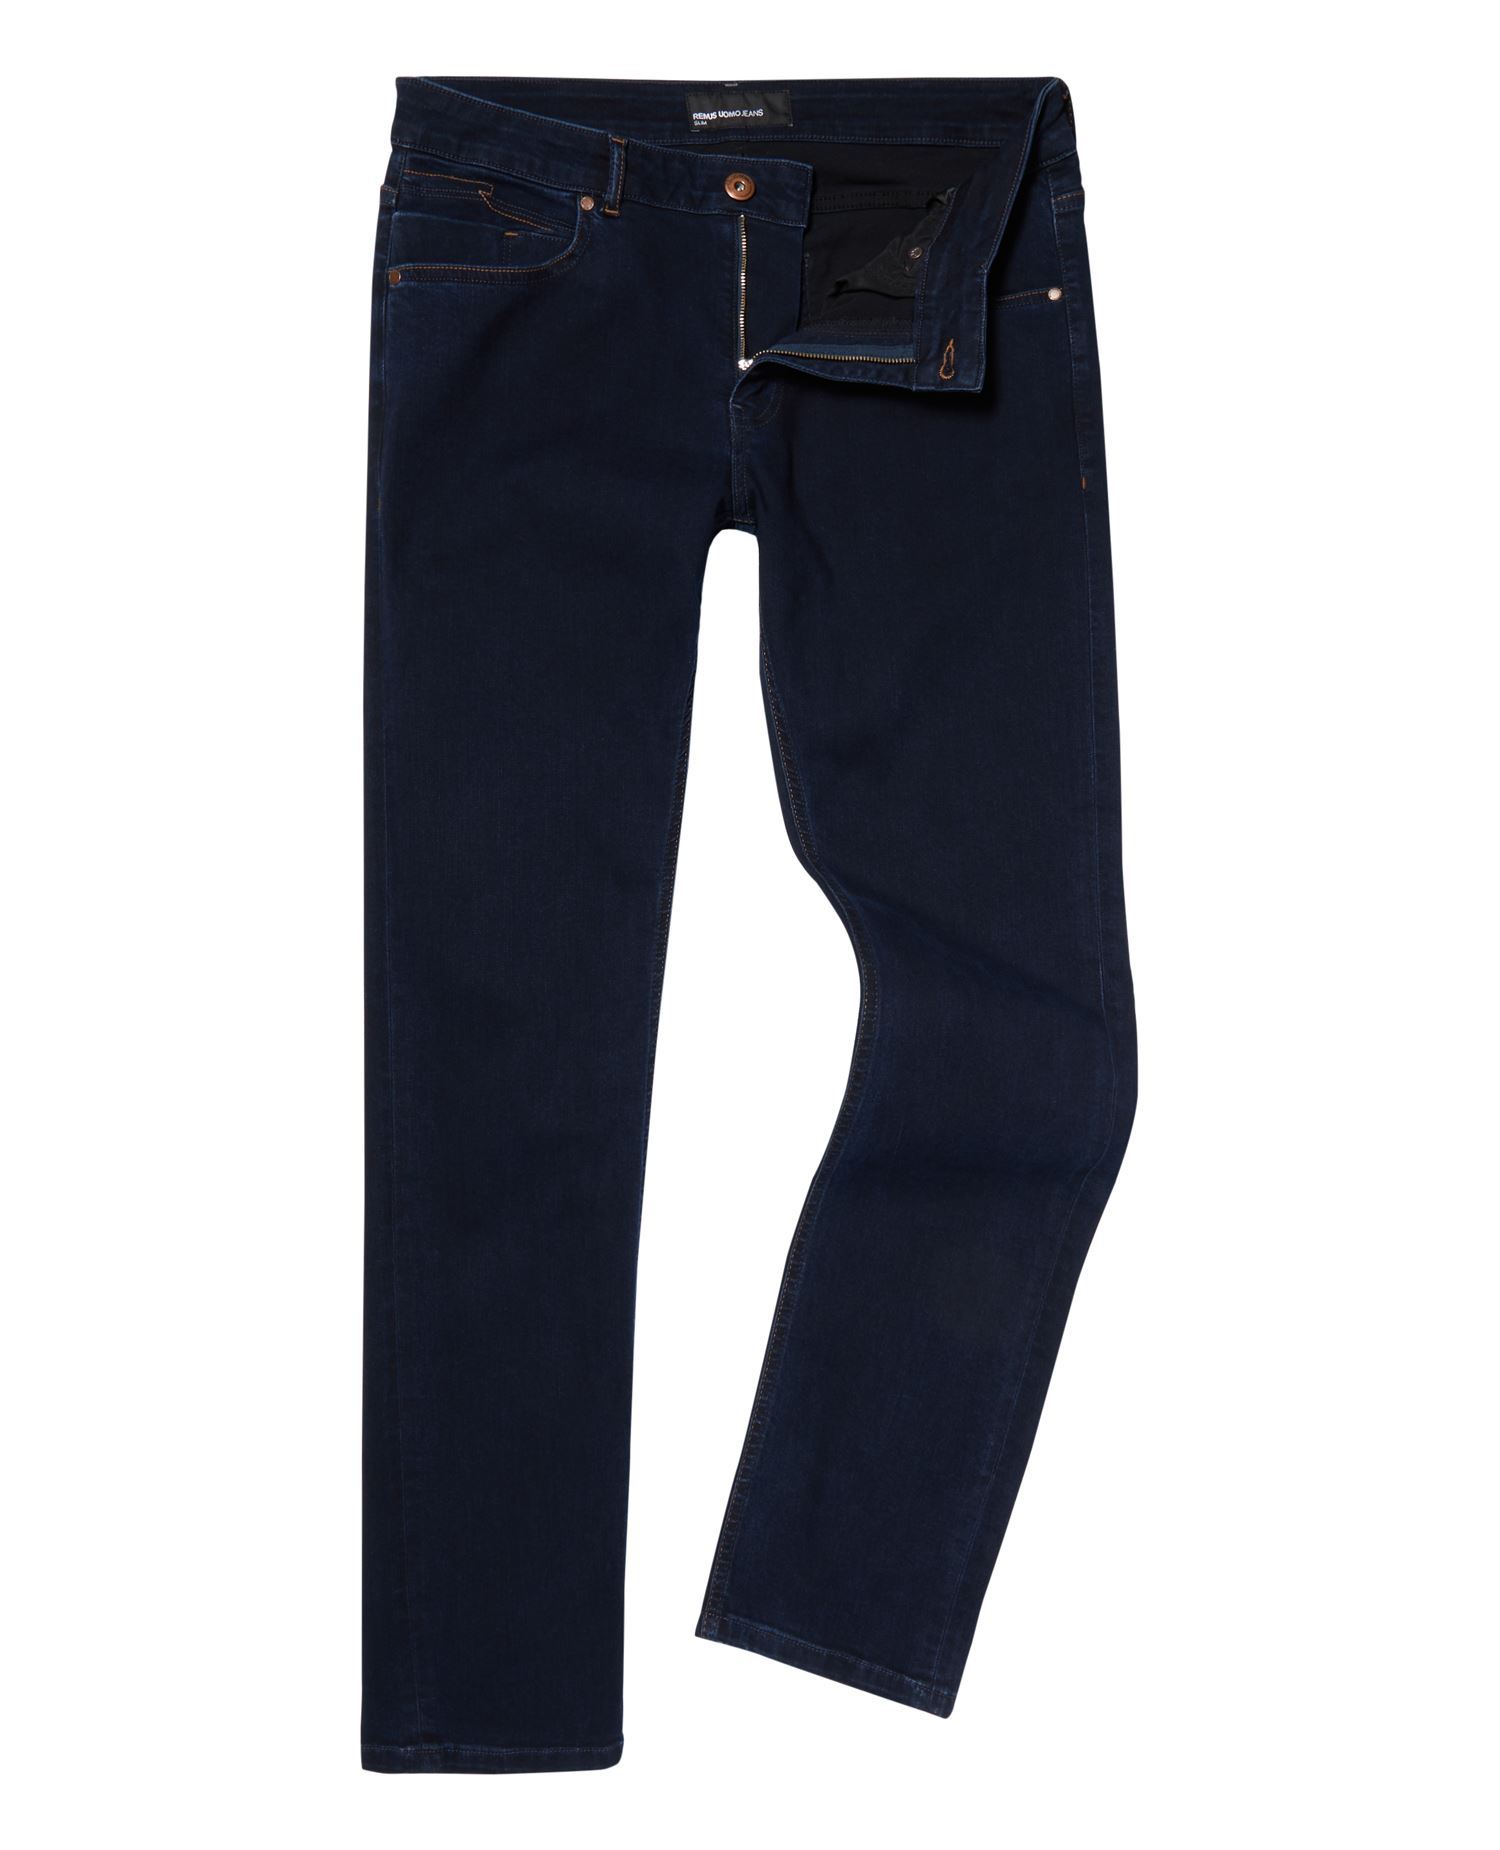 S&T Moore. Remus Uomo Jeans Apollo 60130